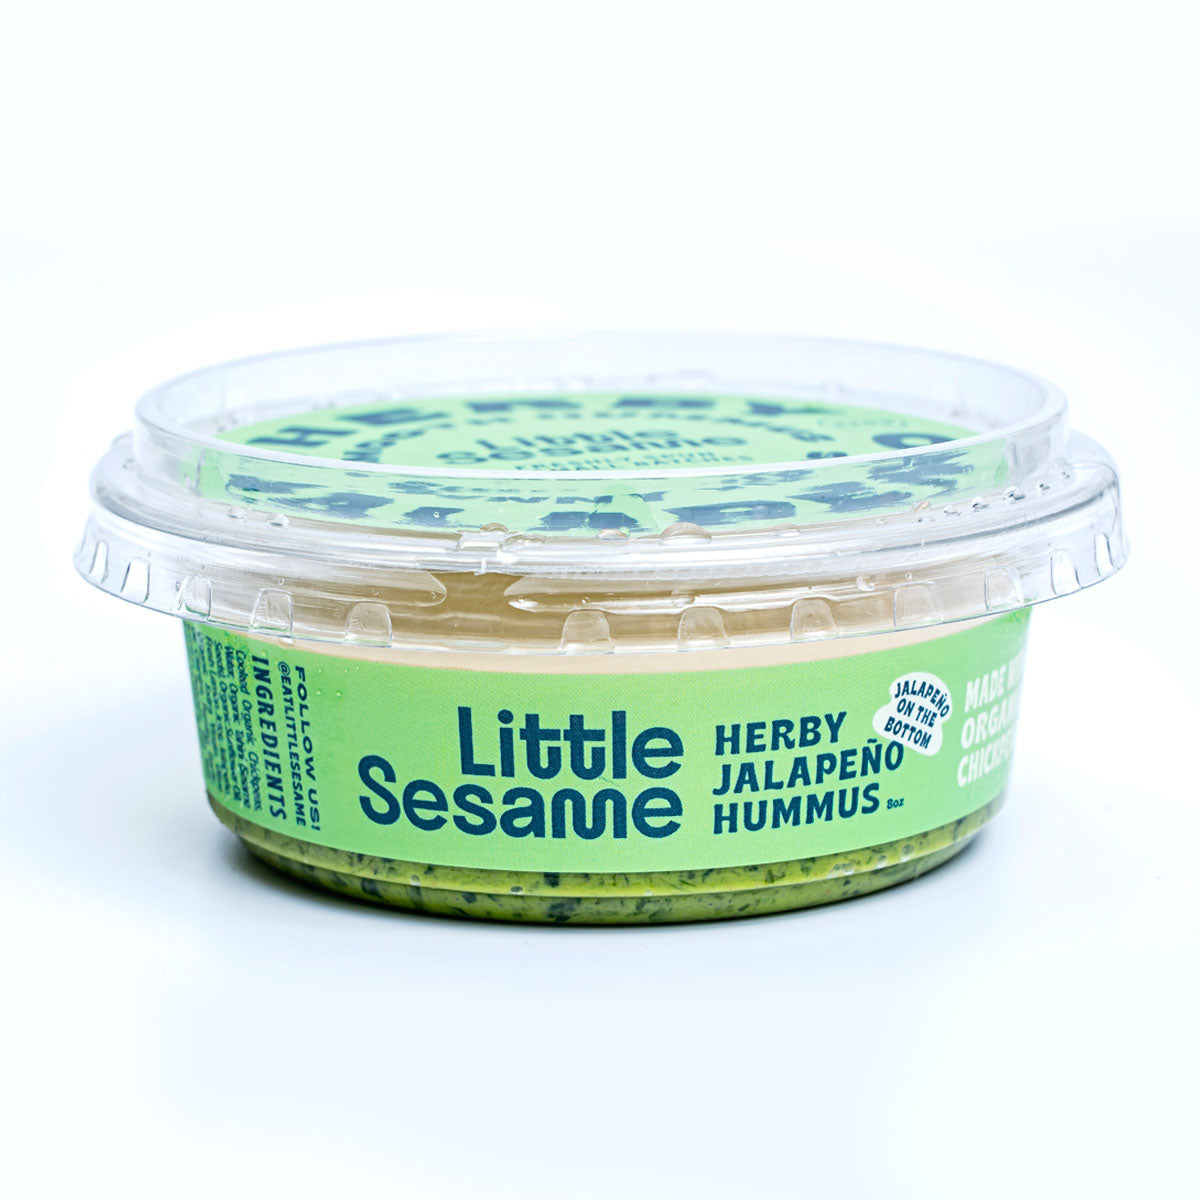 Wholesale Little Sesame Herby Jalapeno Hummus Retail 8 OZ Bulk